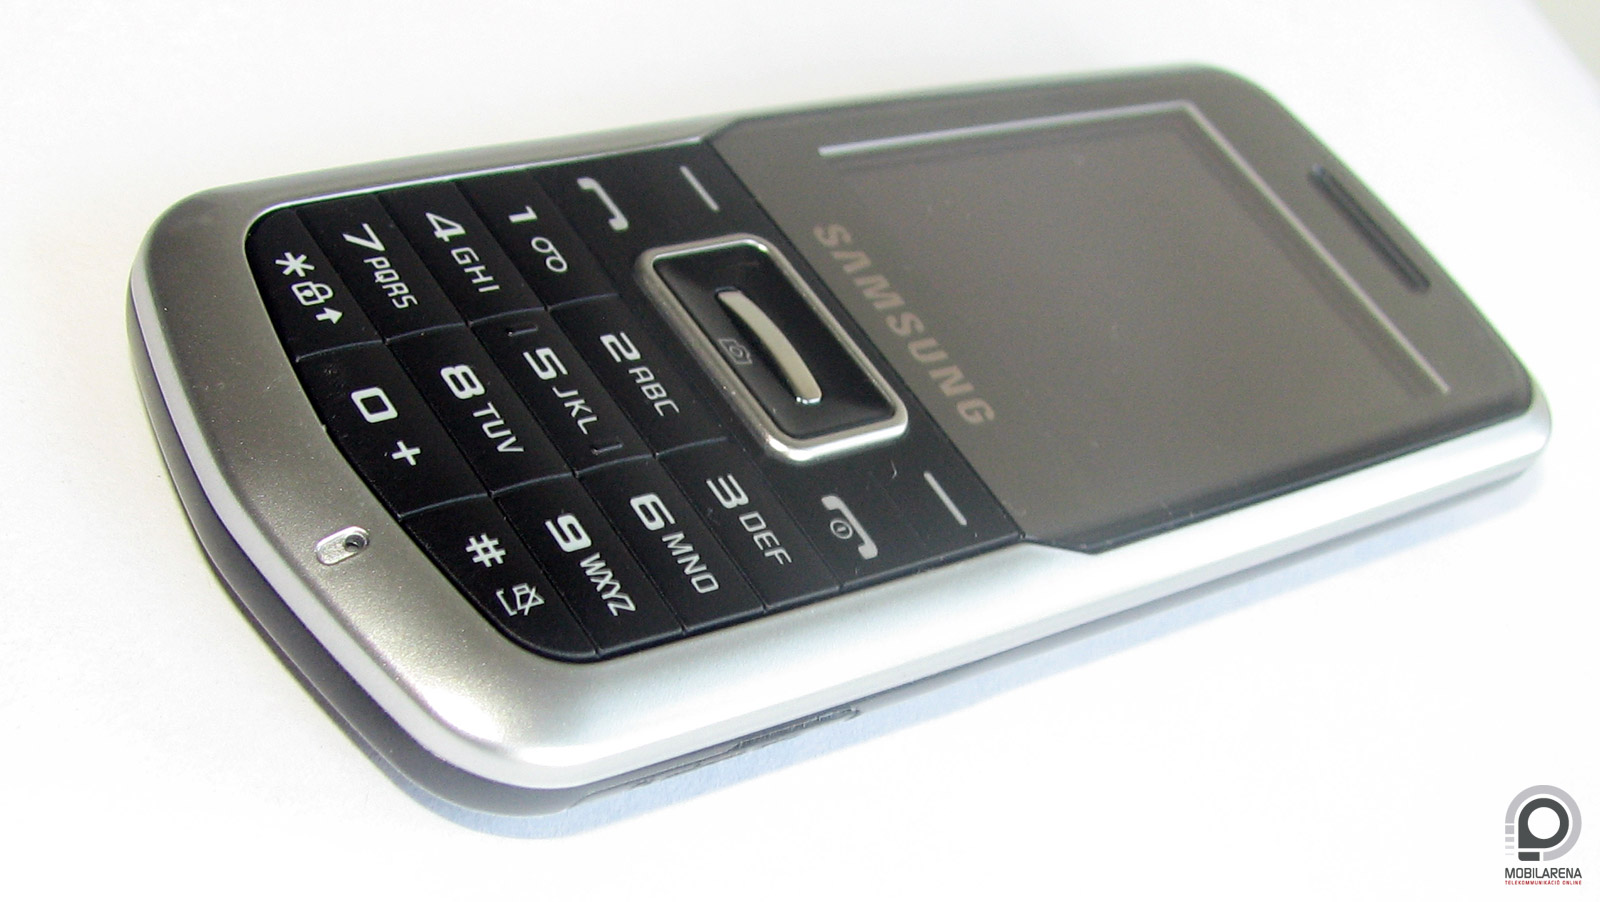 Samsung S3110   small  but not playful   Mobilarena MobileArsenal